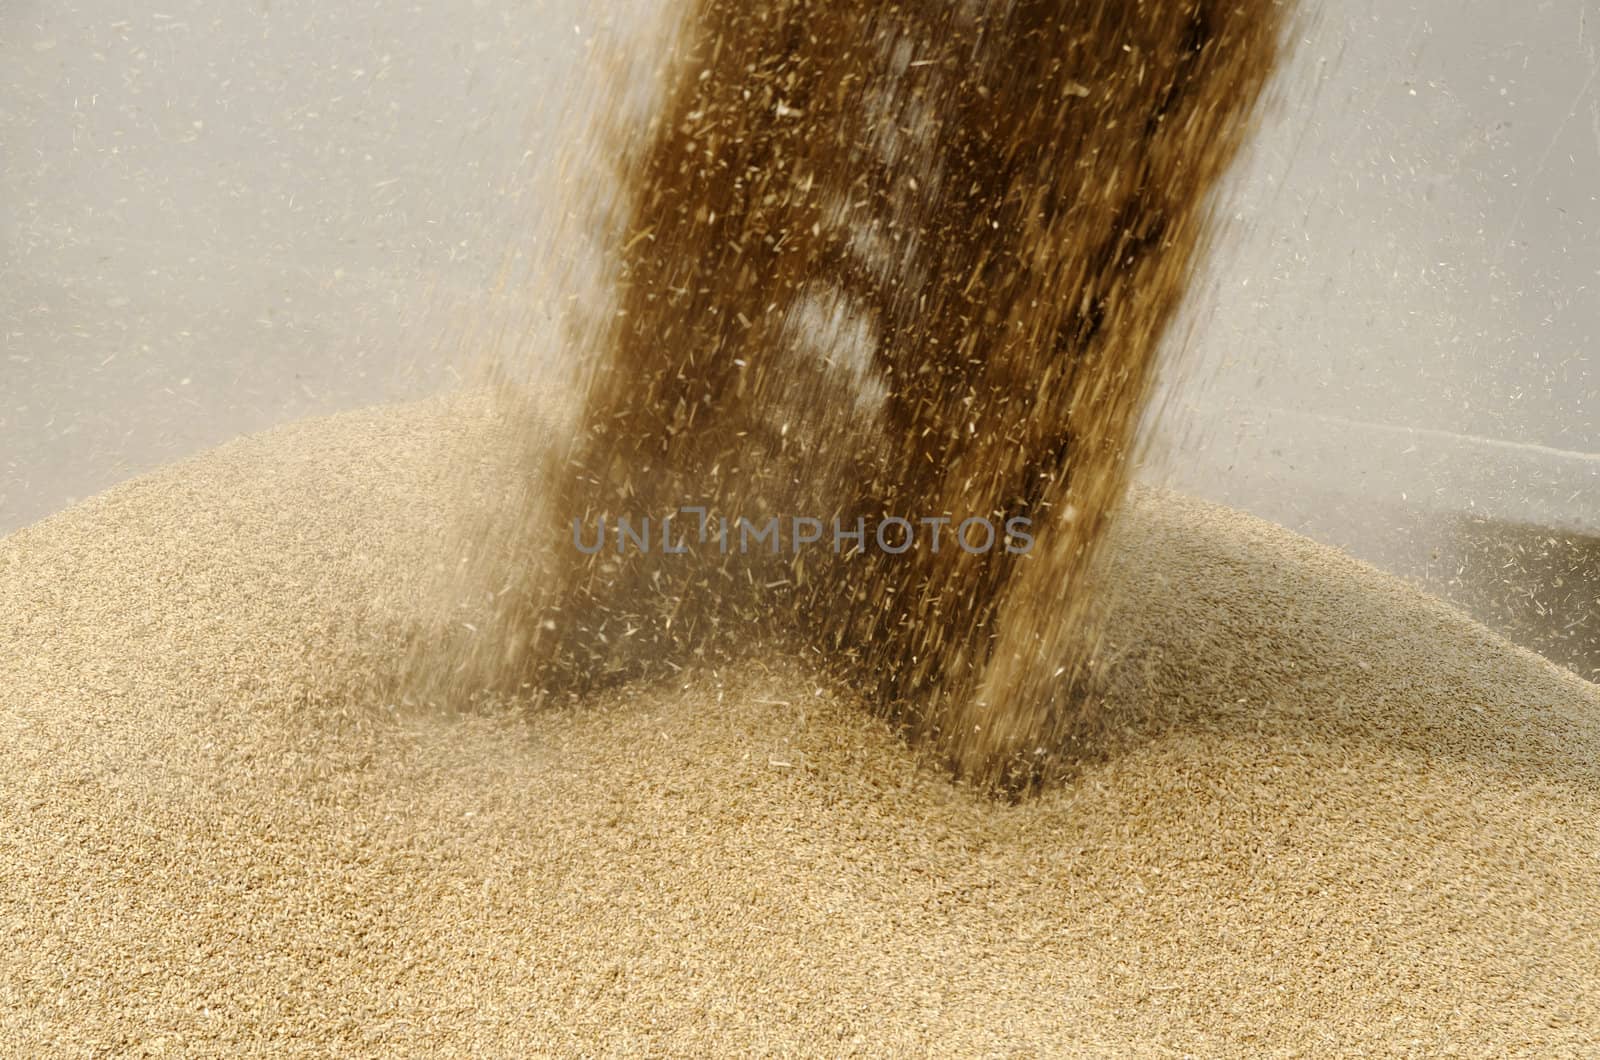 wheat grains loading by gufoto